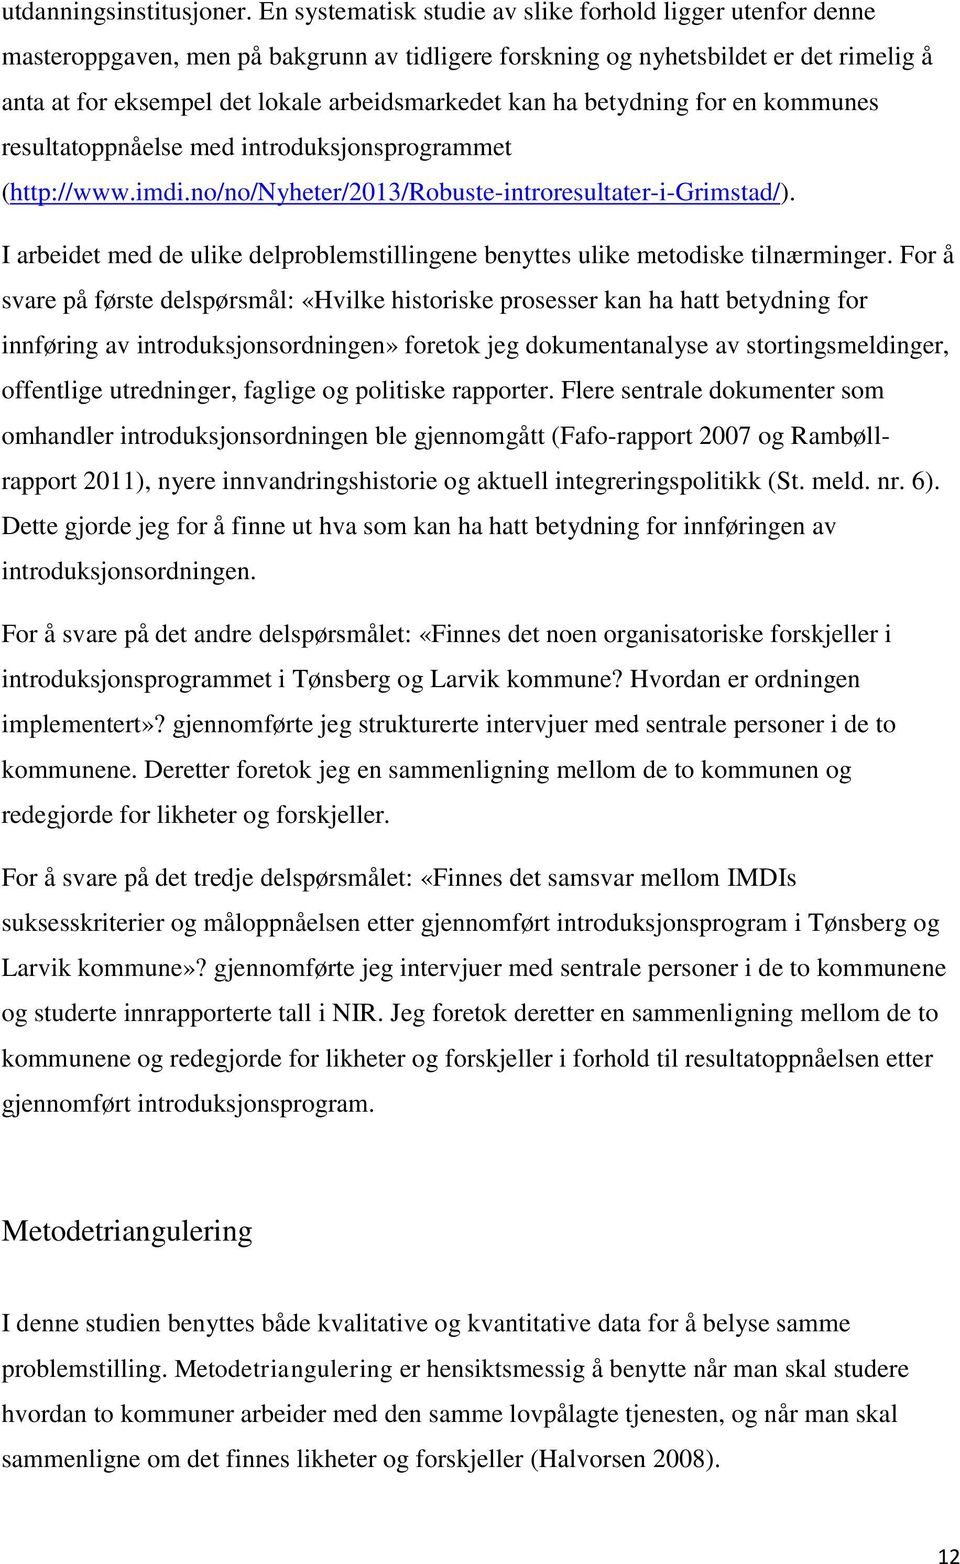 ha betydning for en kommunes resultatoppnåelse med introduksjonsprogrammet (http://www.imdi.no/no/nyheter/2013/robuste-introresultater-i-grimstad/).